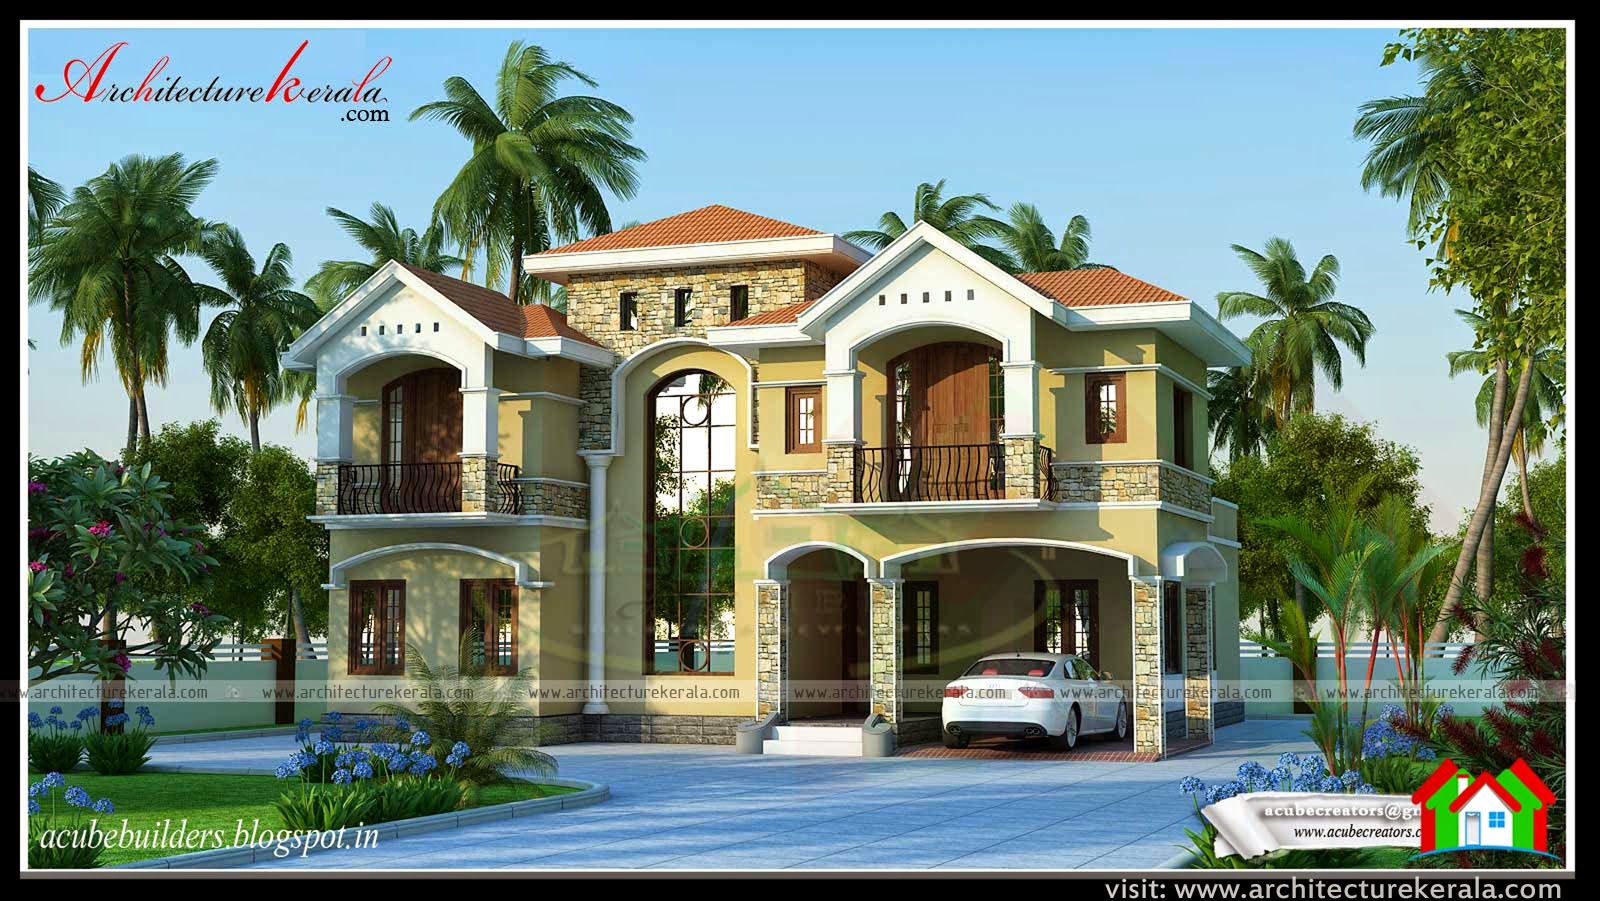 http://www.architecturekerala.com/